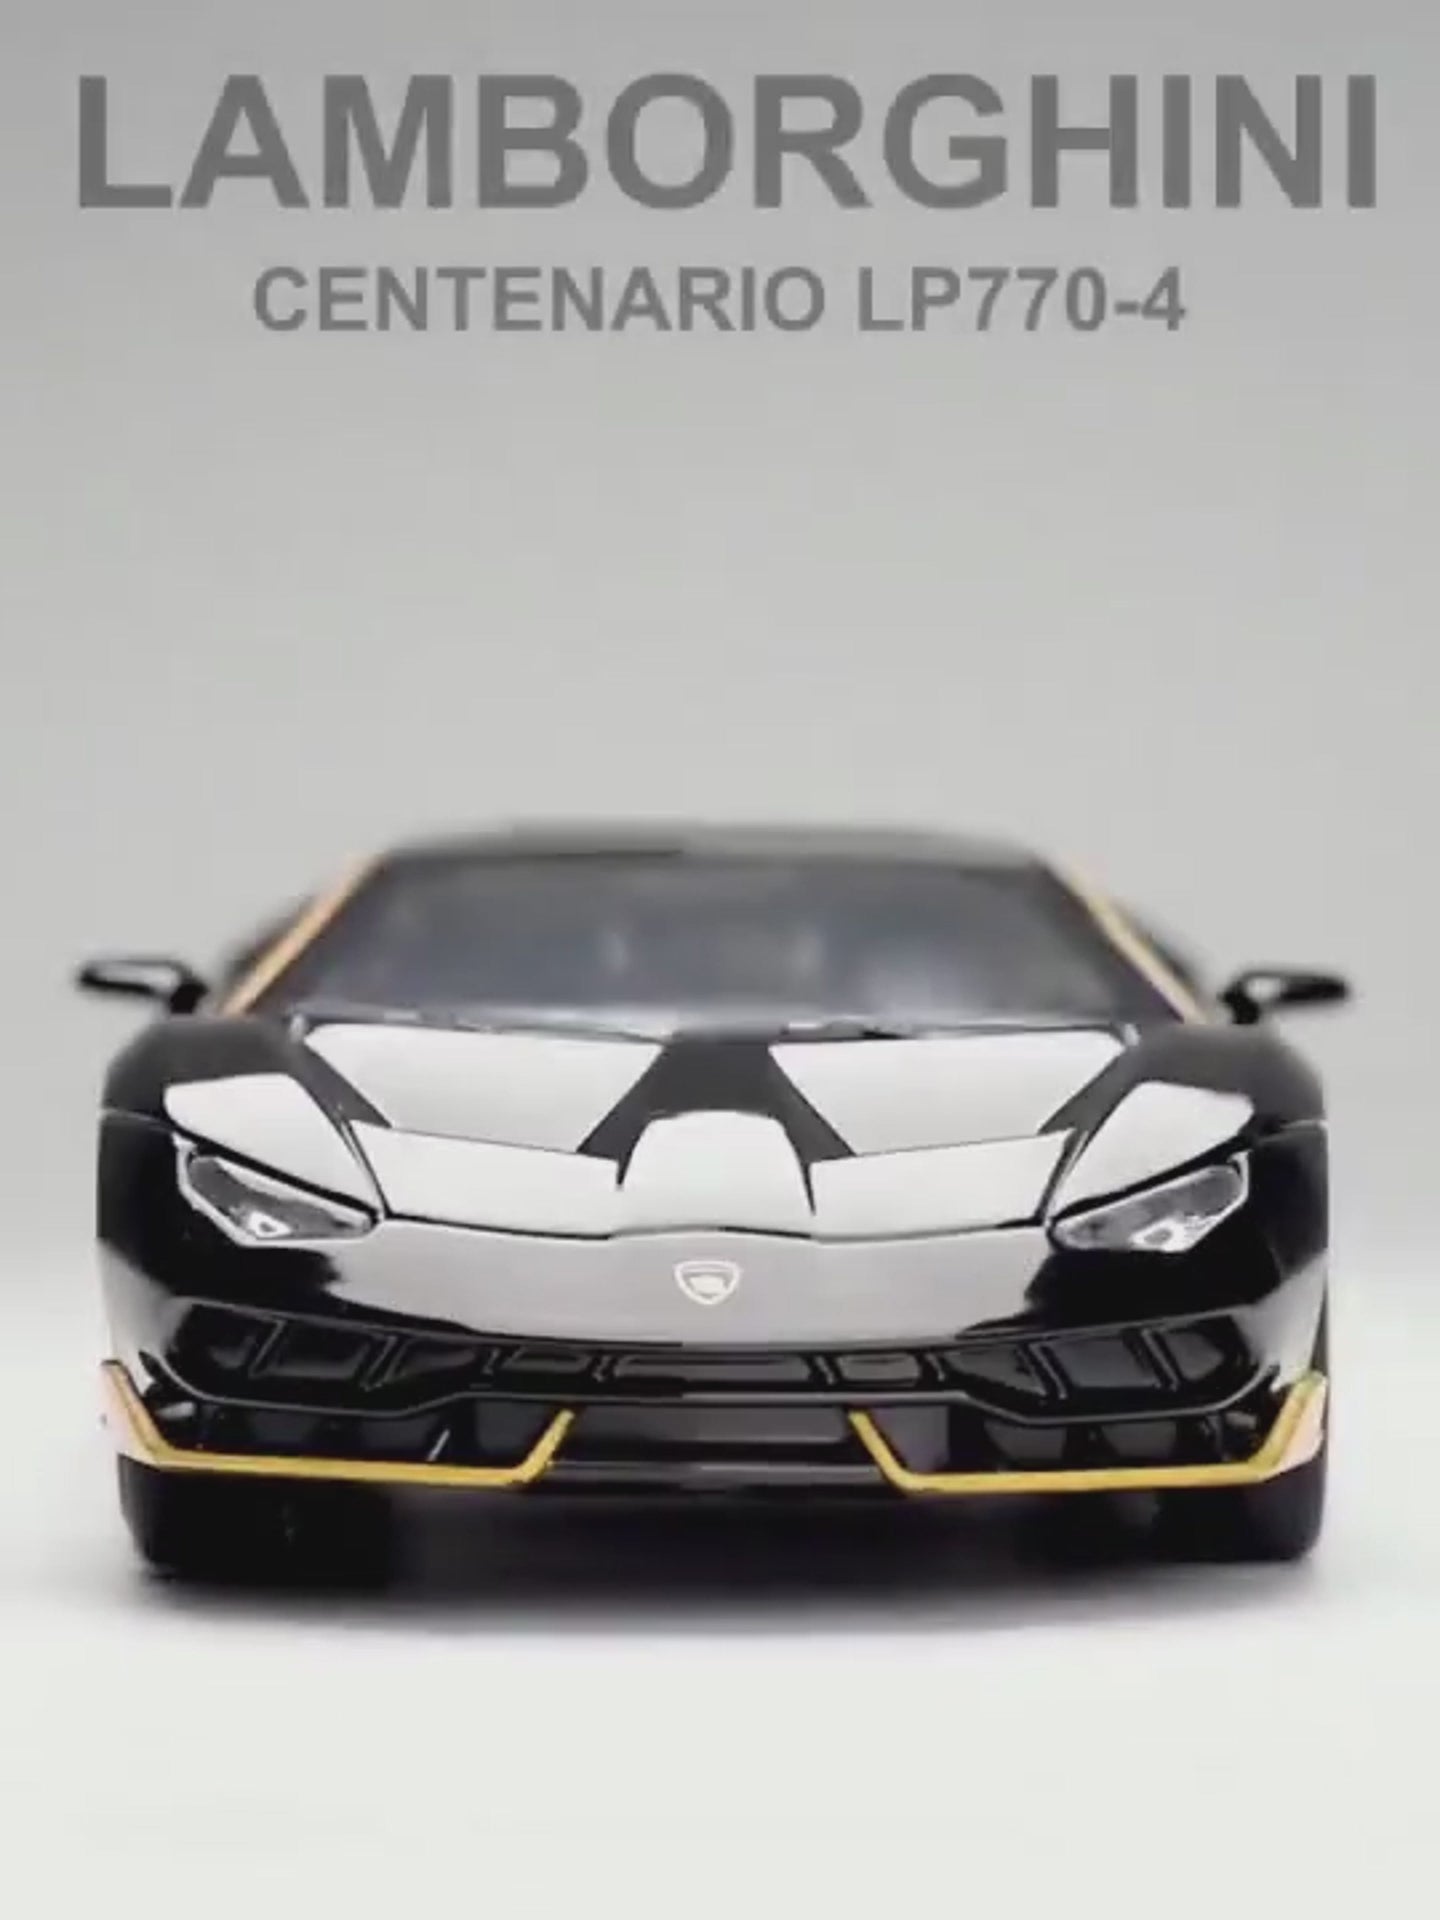 Erstaunliches Lamborghini Centenario LP770-Legierungsautomodell im Maßstab 1:32 